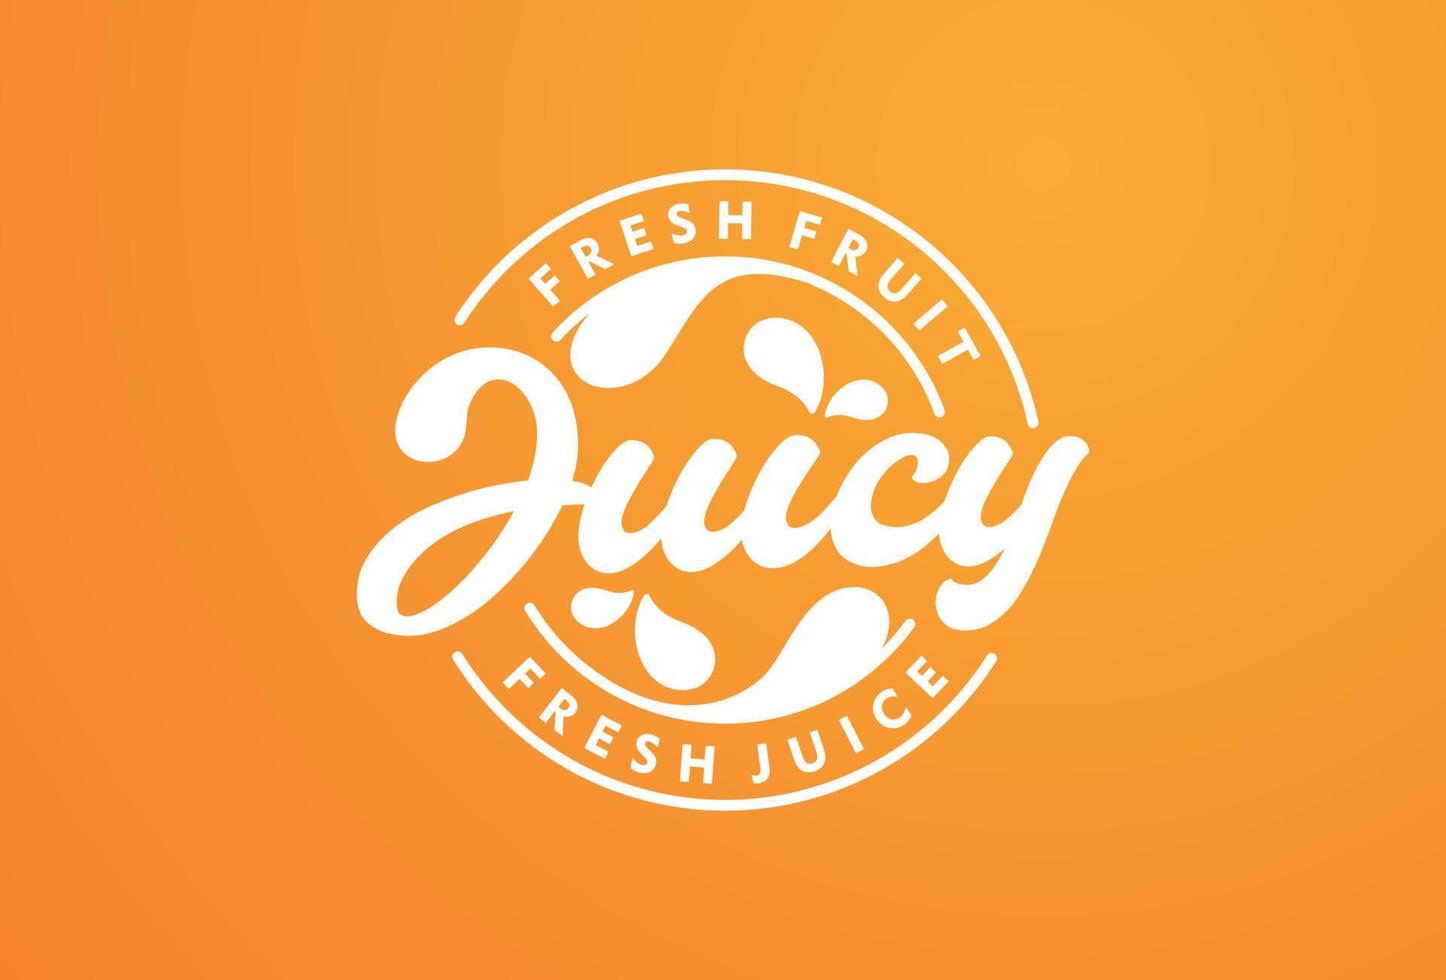 Fruit Juice Fresh sticker emblem logo design vector template